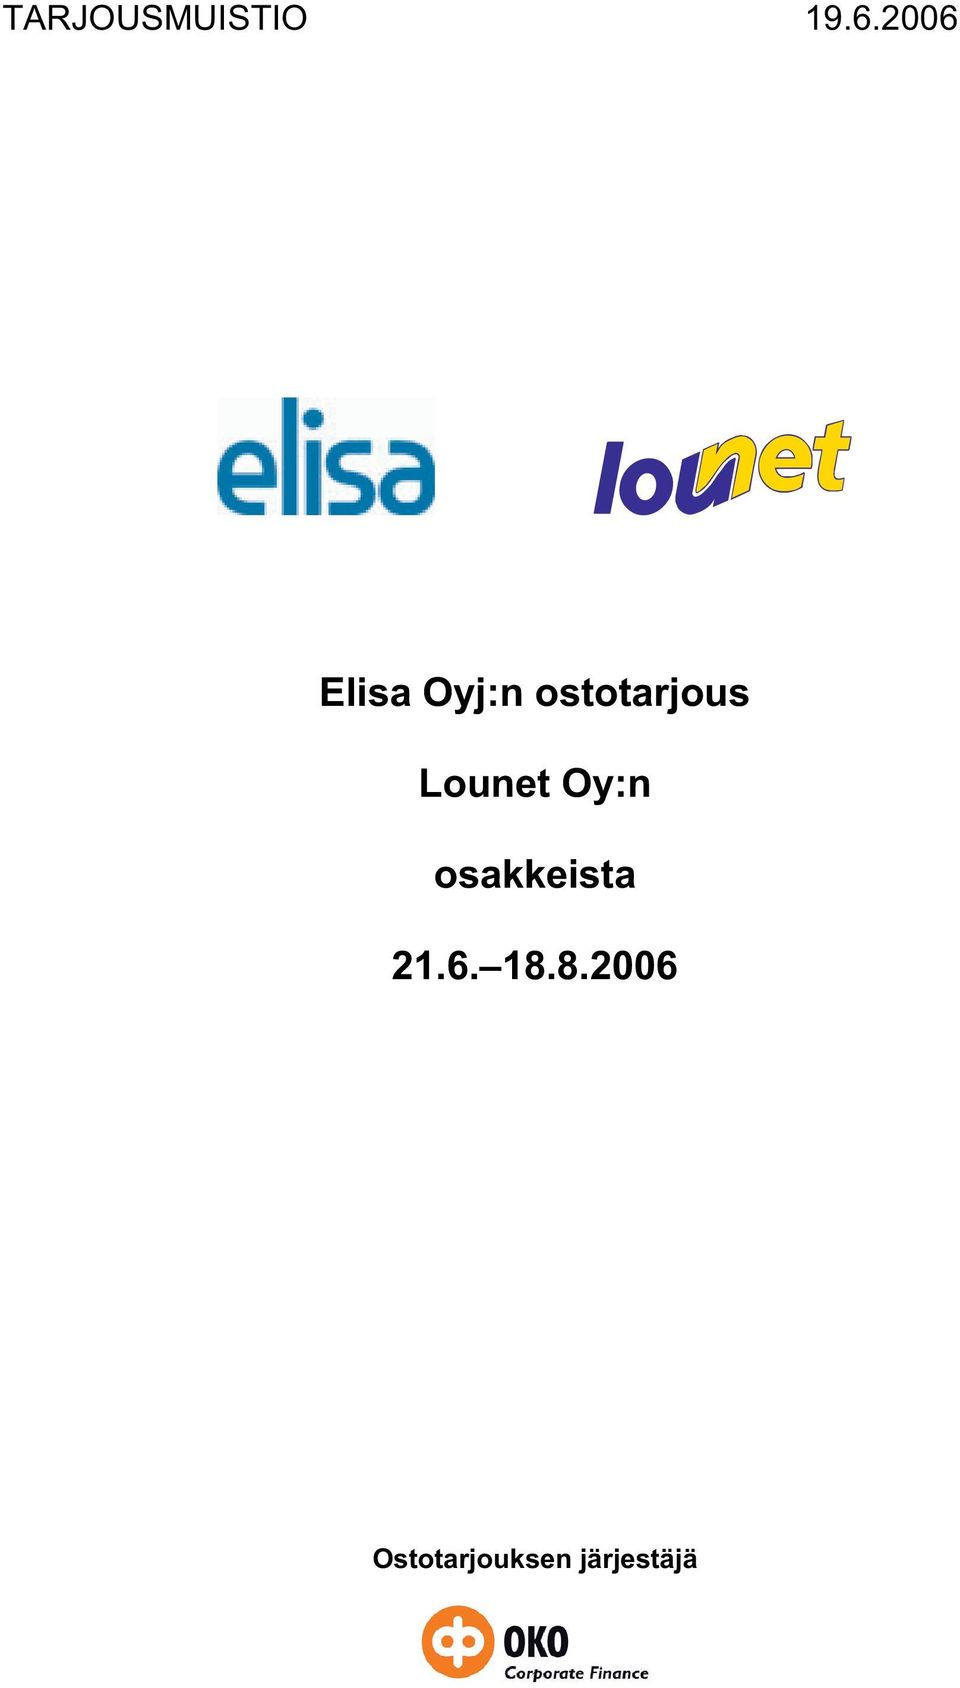 Lounet Oy:n osakkeista 21.6.